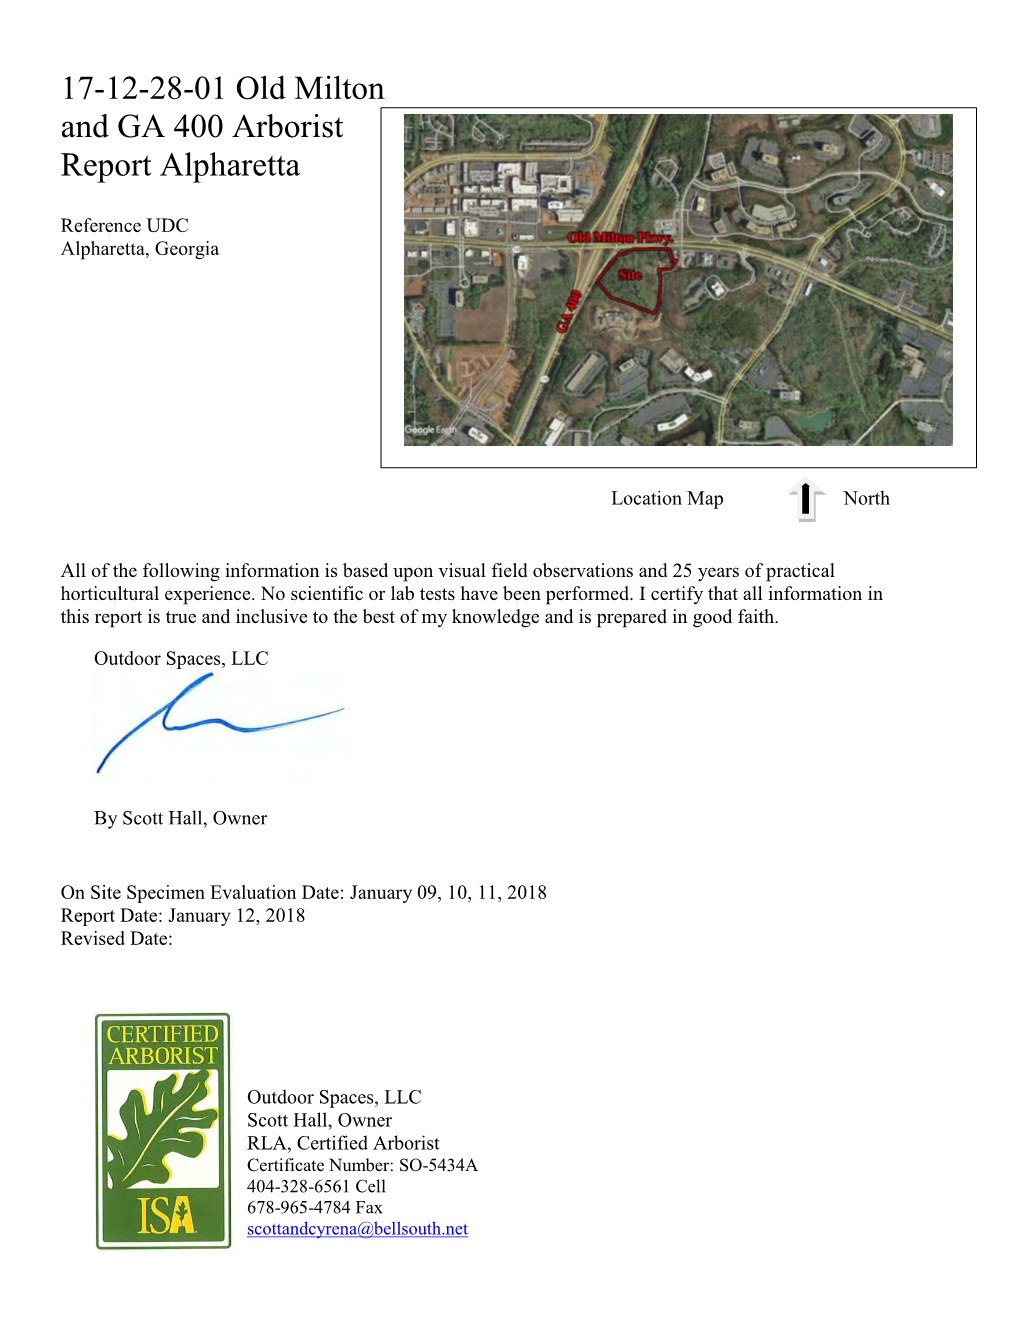 17-12-28-01 Old Milton and GA 400 Arborist Report Alpharetta